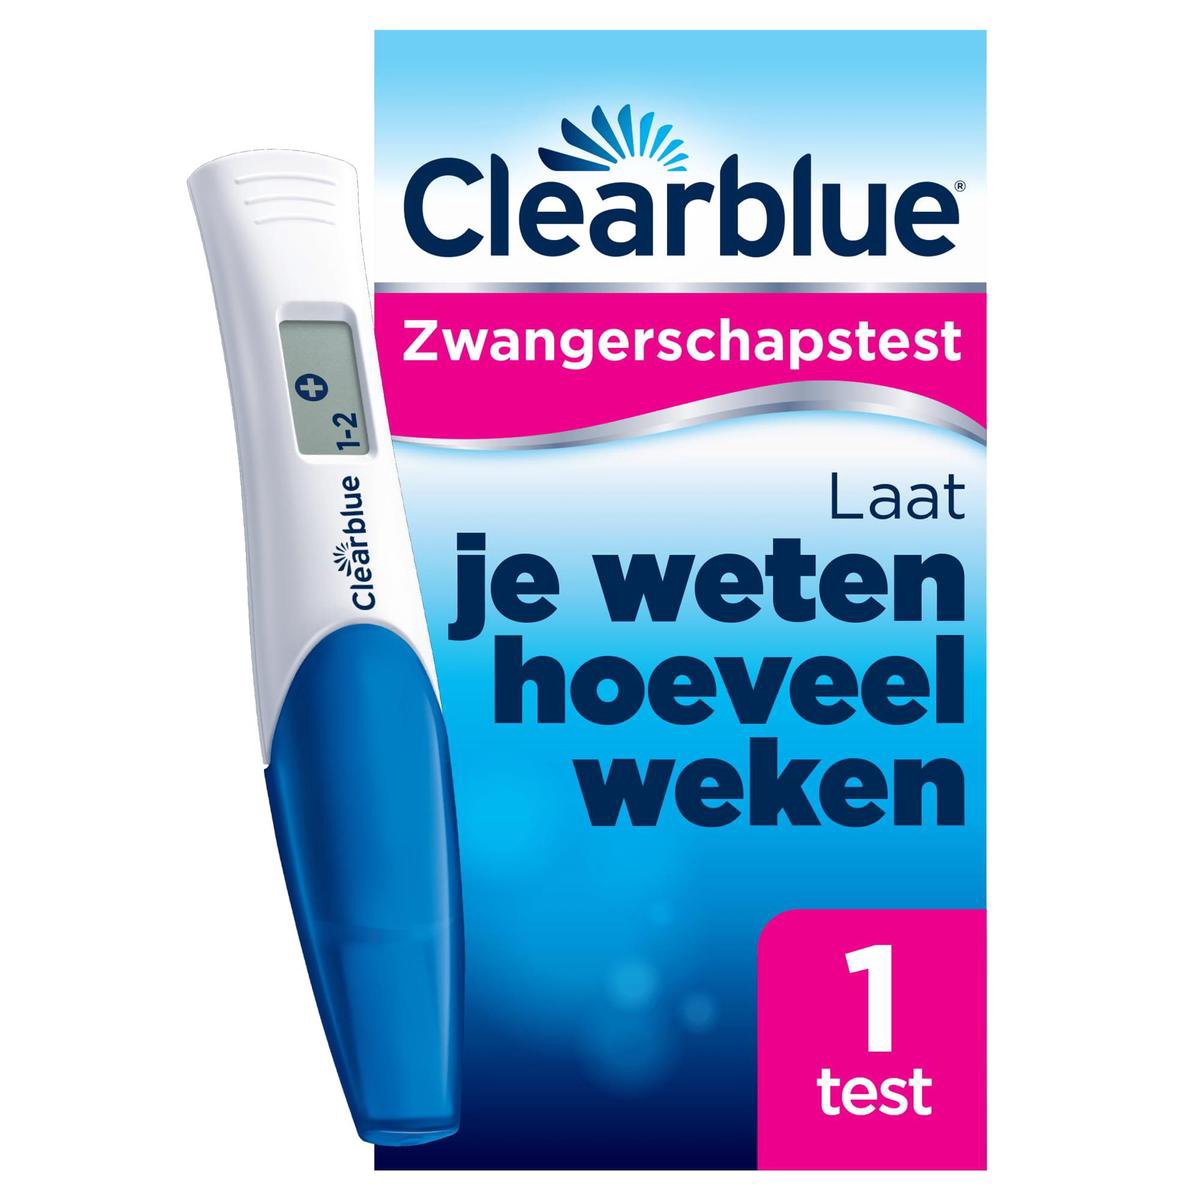 Clearblue Zwangerschapstest Met Wekenindicator: Stelt Het Aantal Weken Vast, 1 Digitale Test - Clearblue